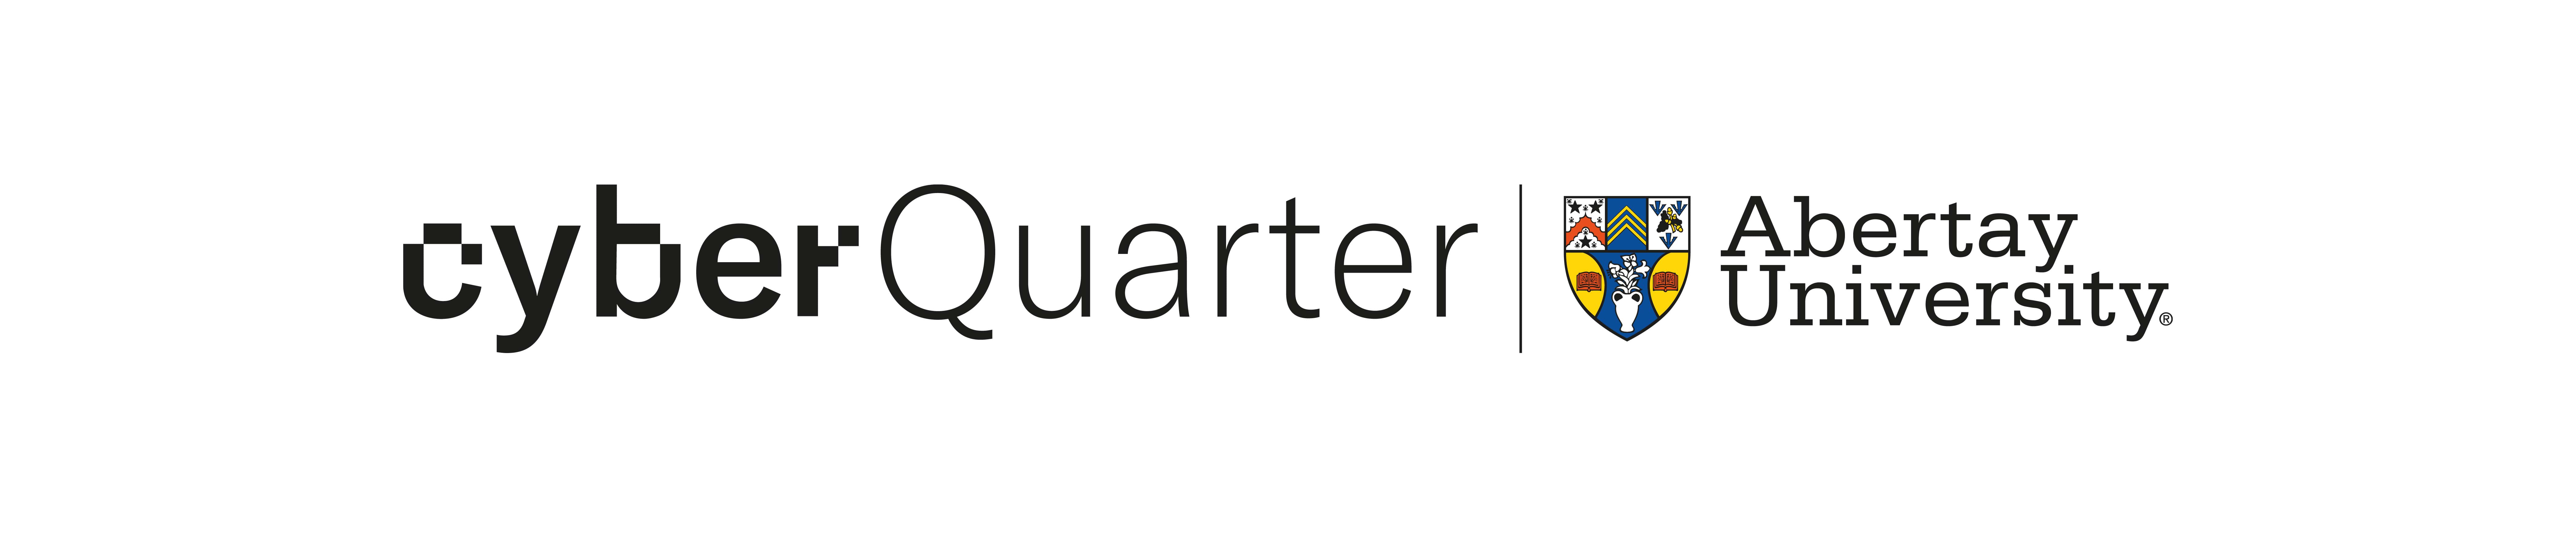 Abertay cyberQuarter logo in black on a white background